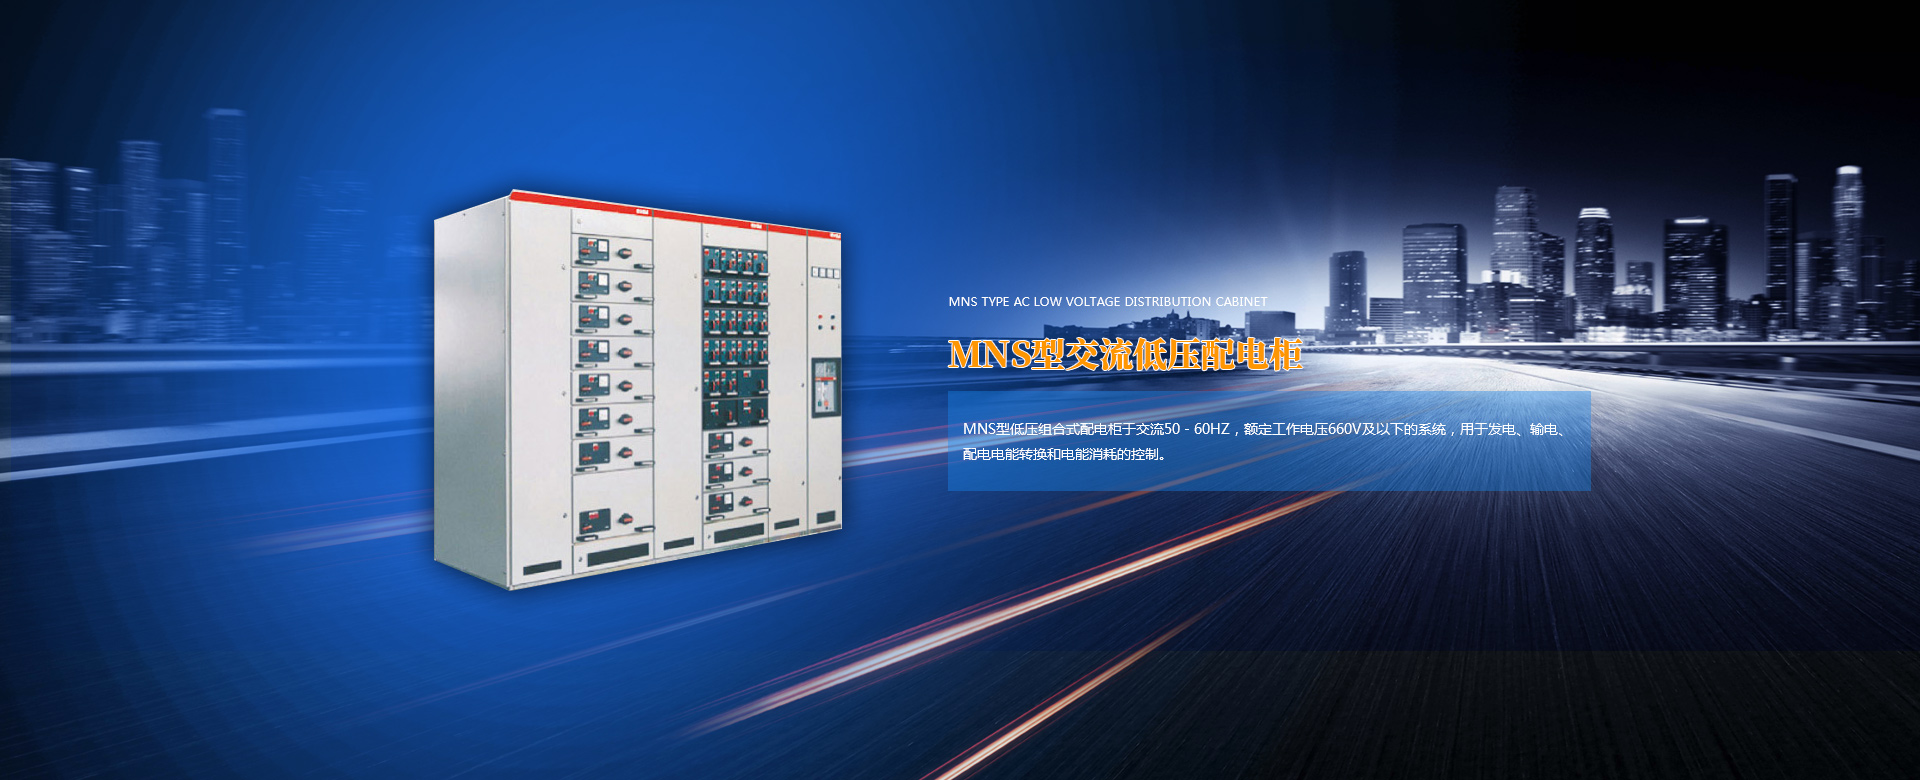 MNS型交流低壓配電柜 